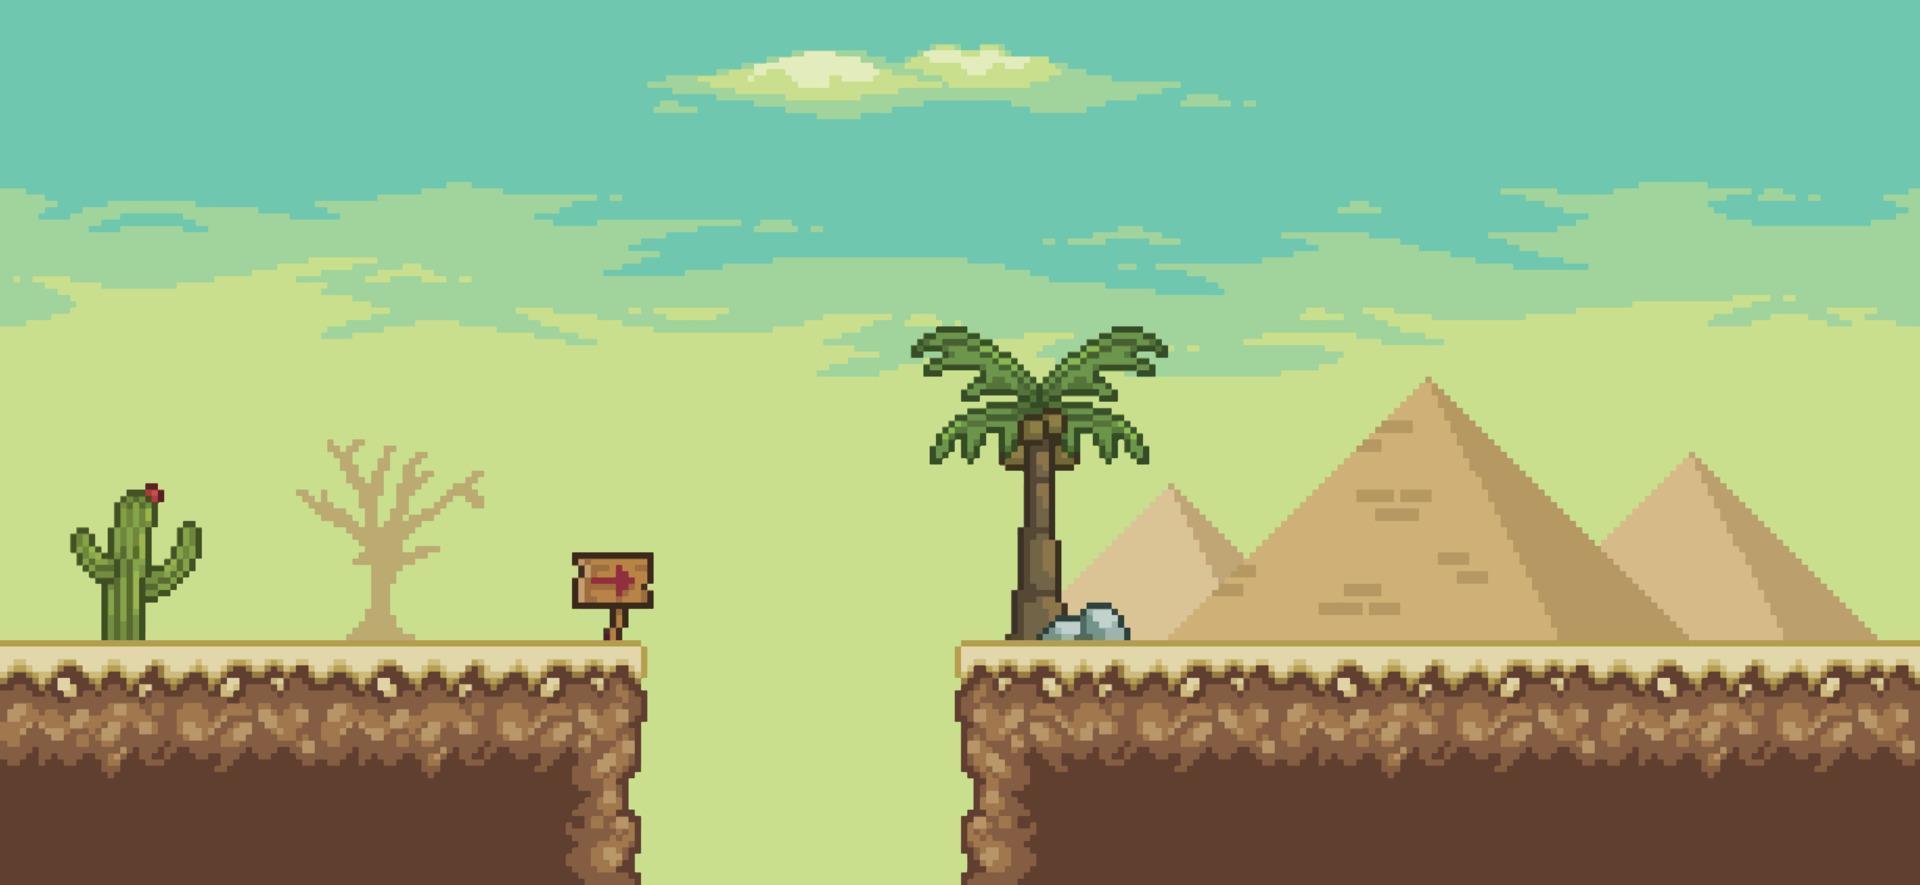 Pixel art desert game scene with palm tree, pyramids, cactuses, tree 8bit background vector